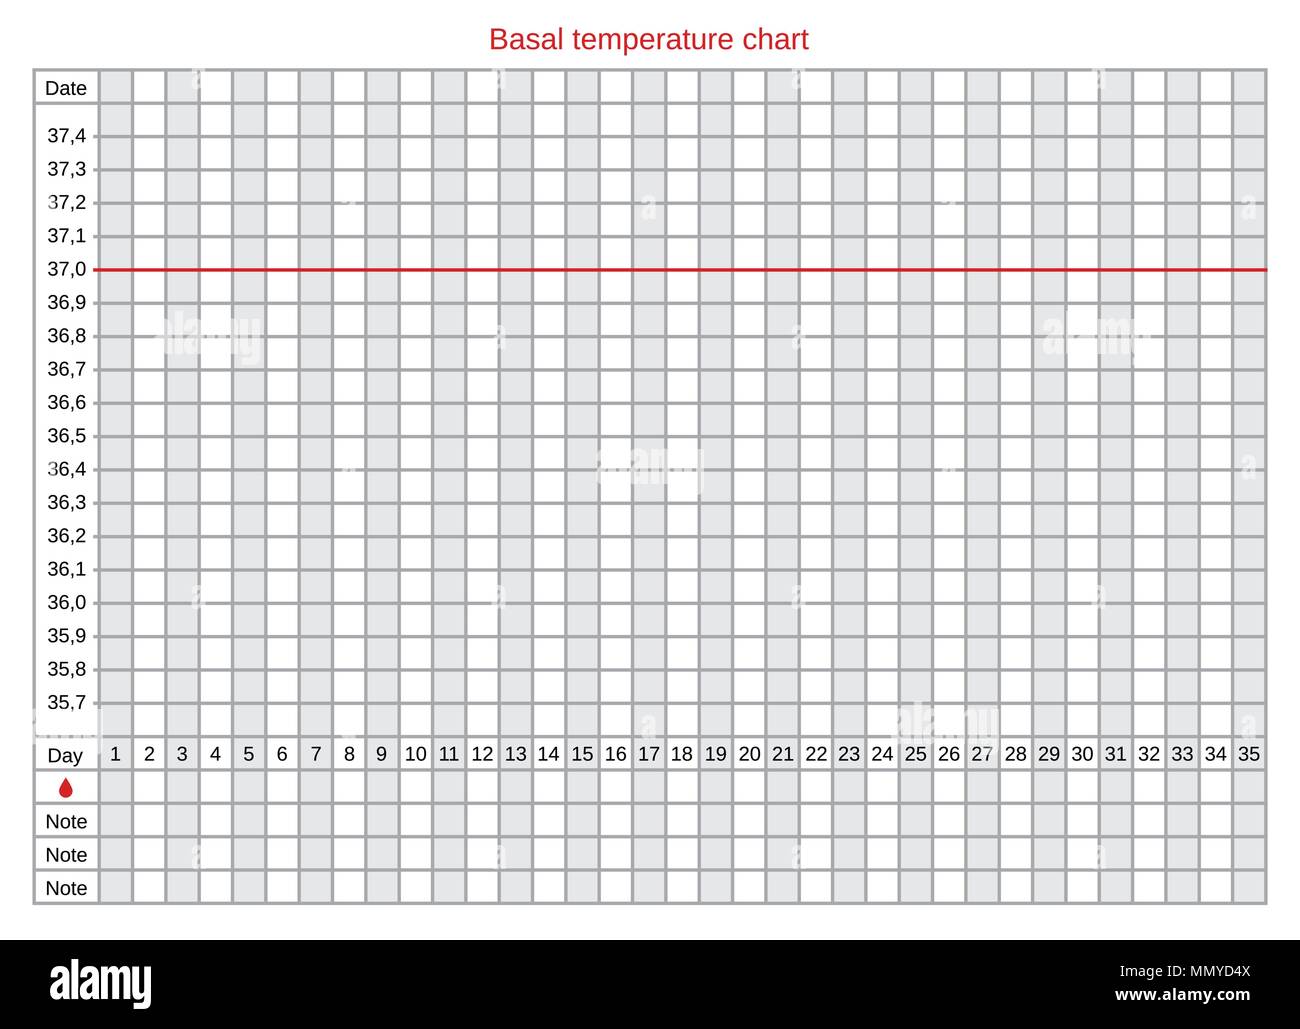 Basal Body Temp Chart Celsius